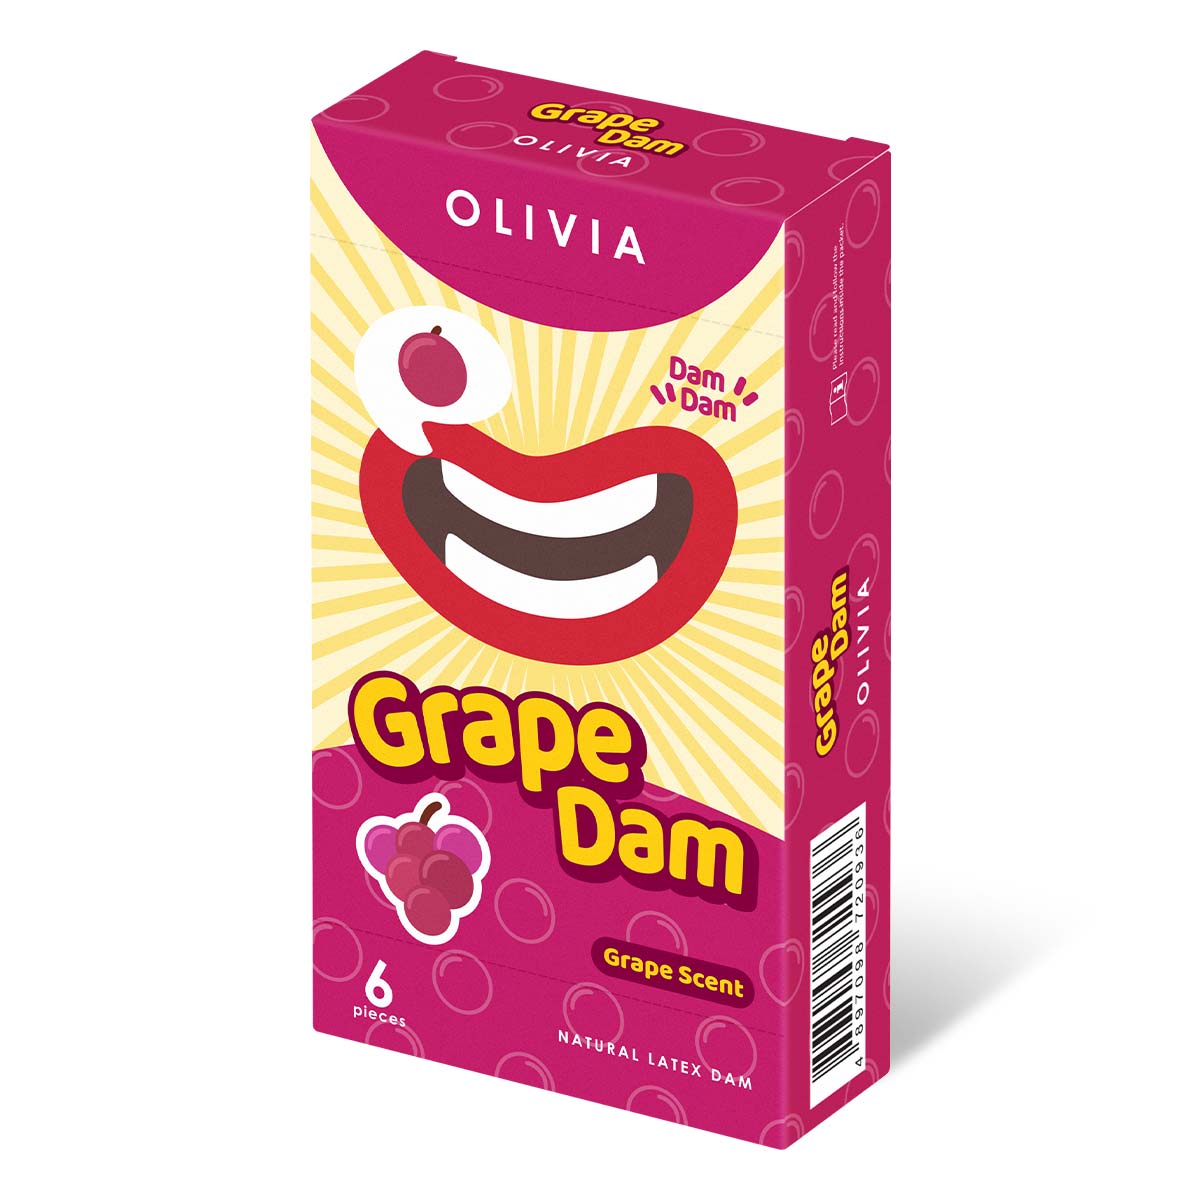 Olivia Grape Scent 6's Pack Natural Latex Dams-p_1